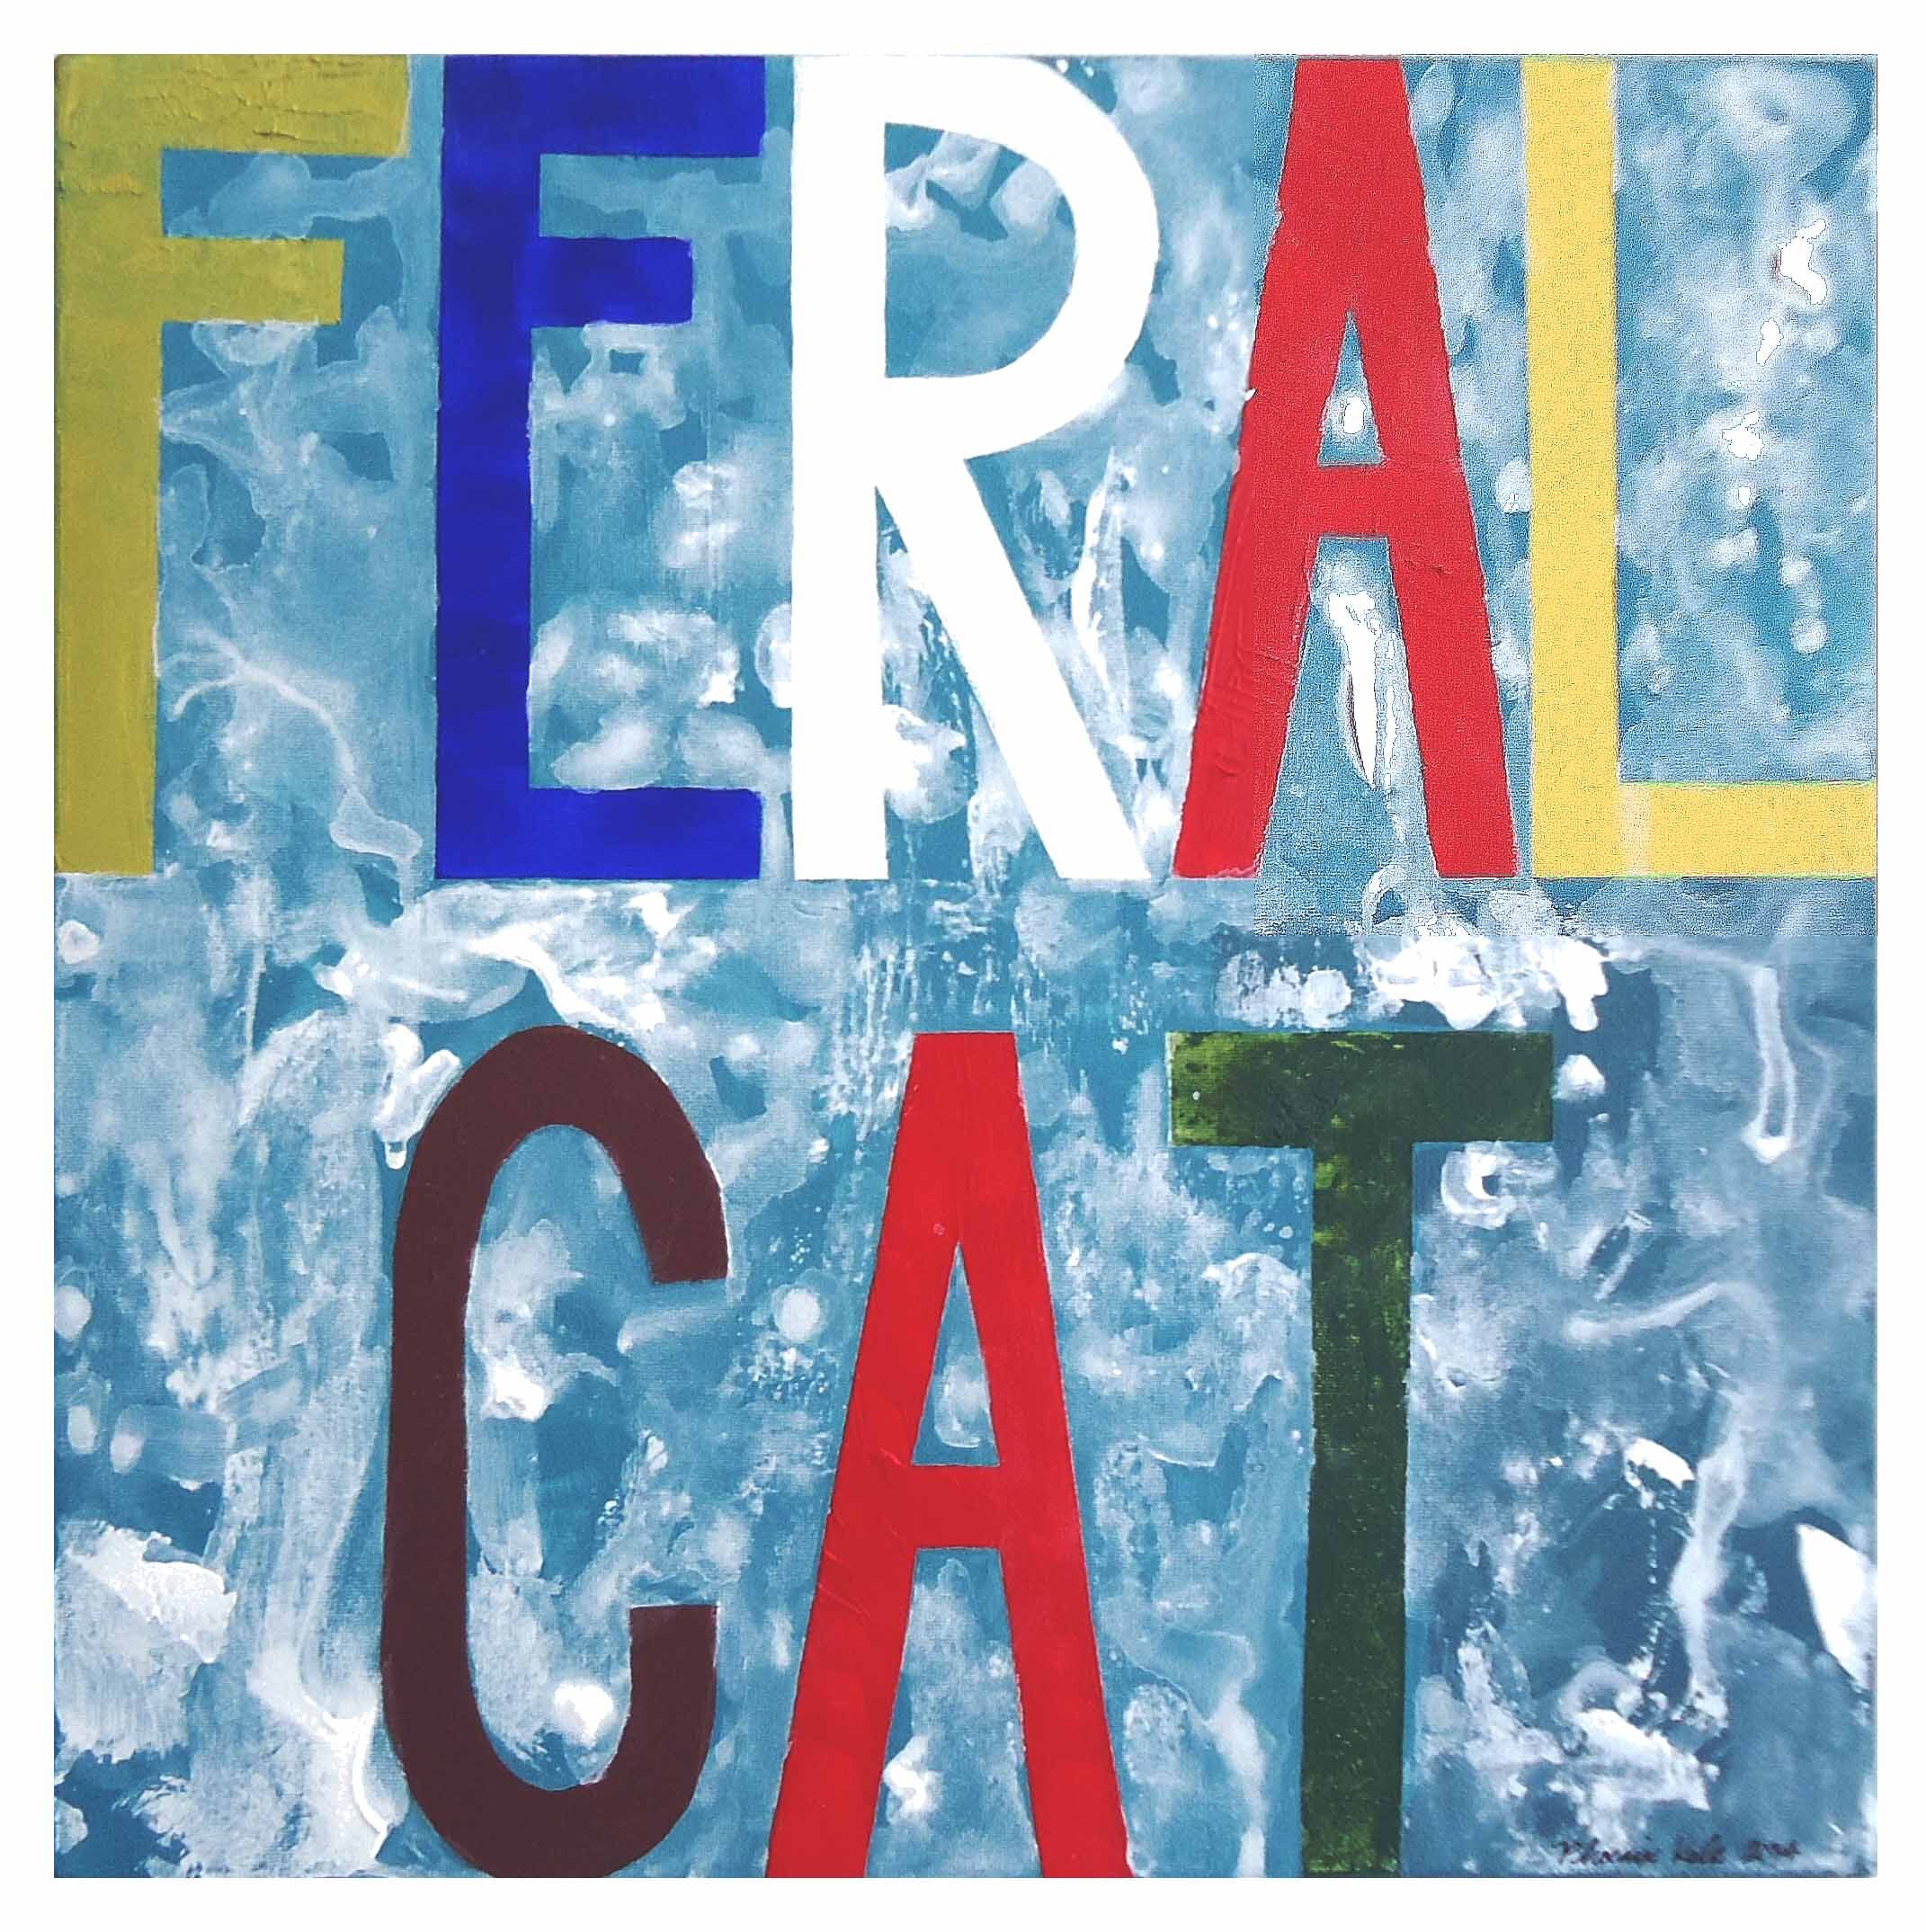 "Feral Cat", 30x30cm, acrylic paint on canvas, 2013